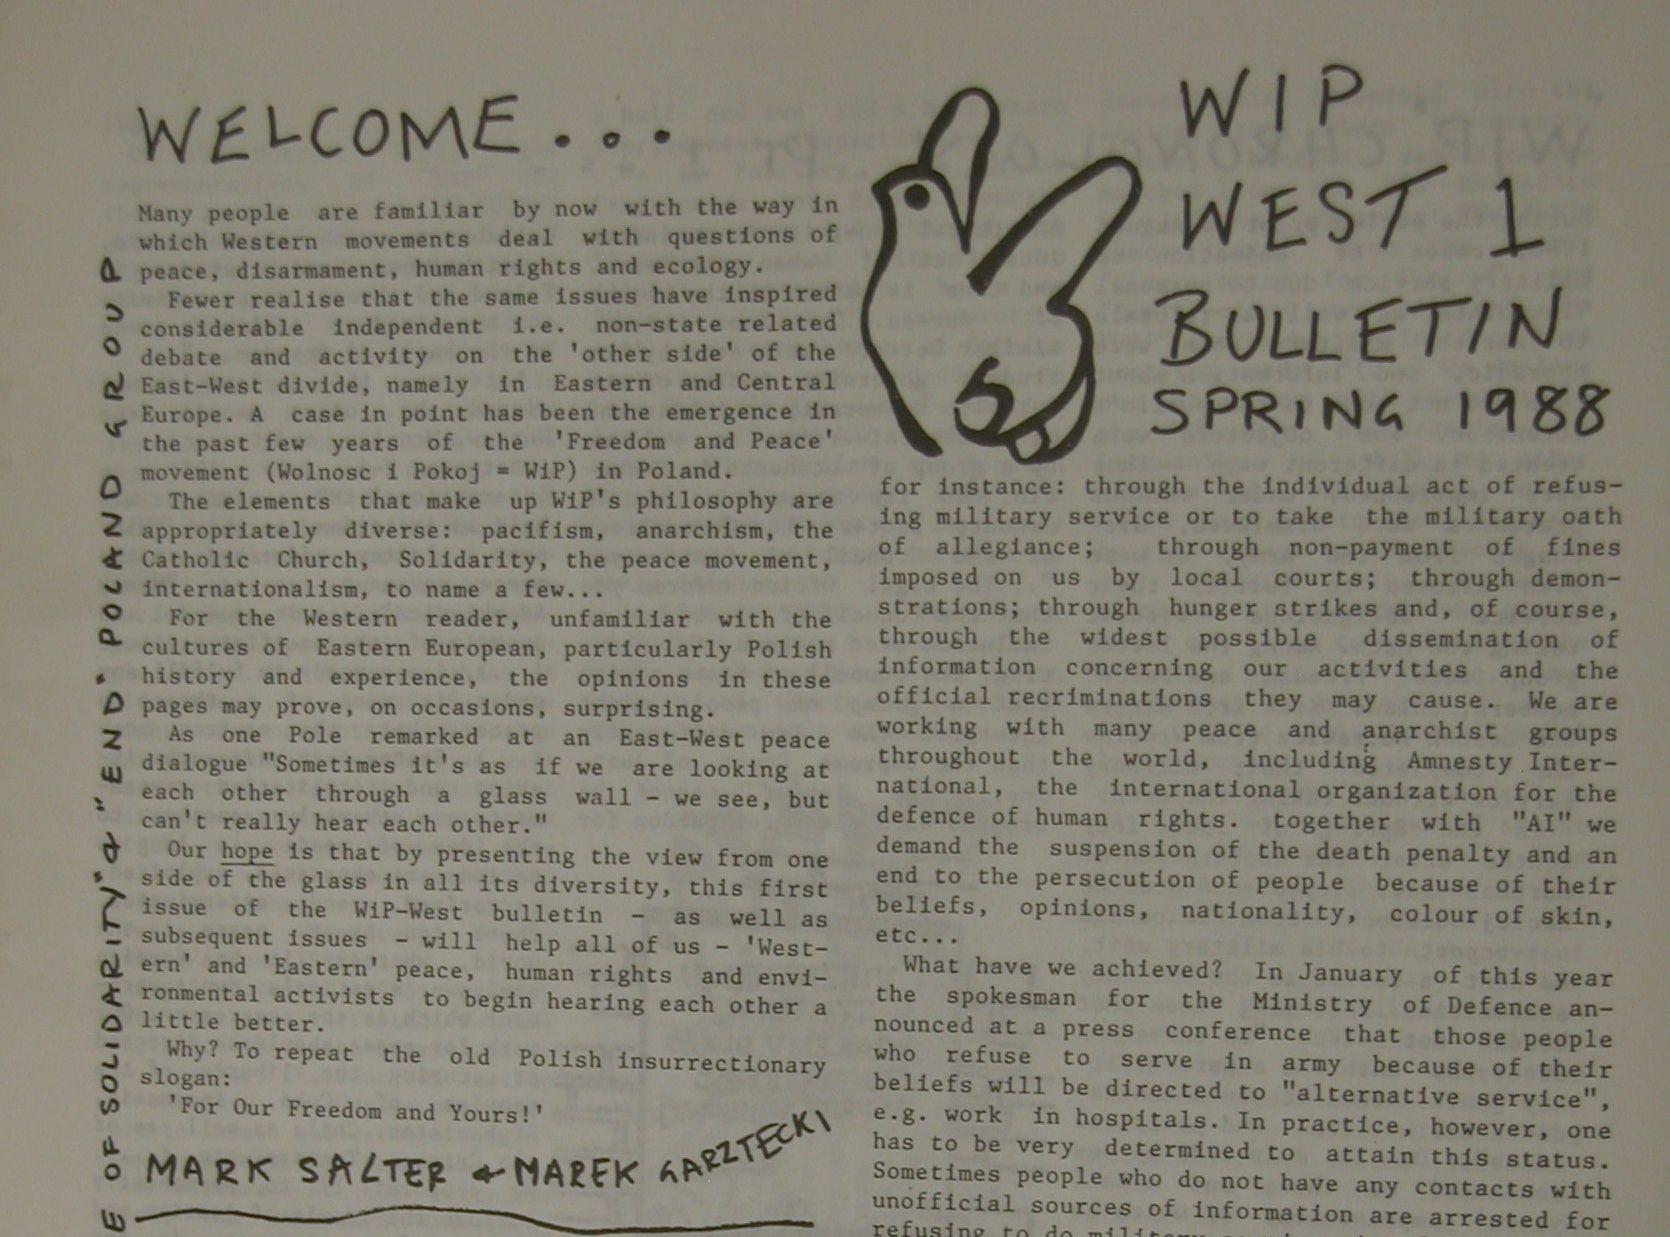 WiP West Bulletin